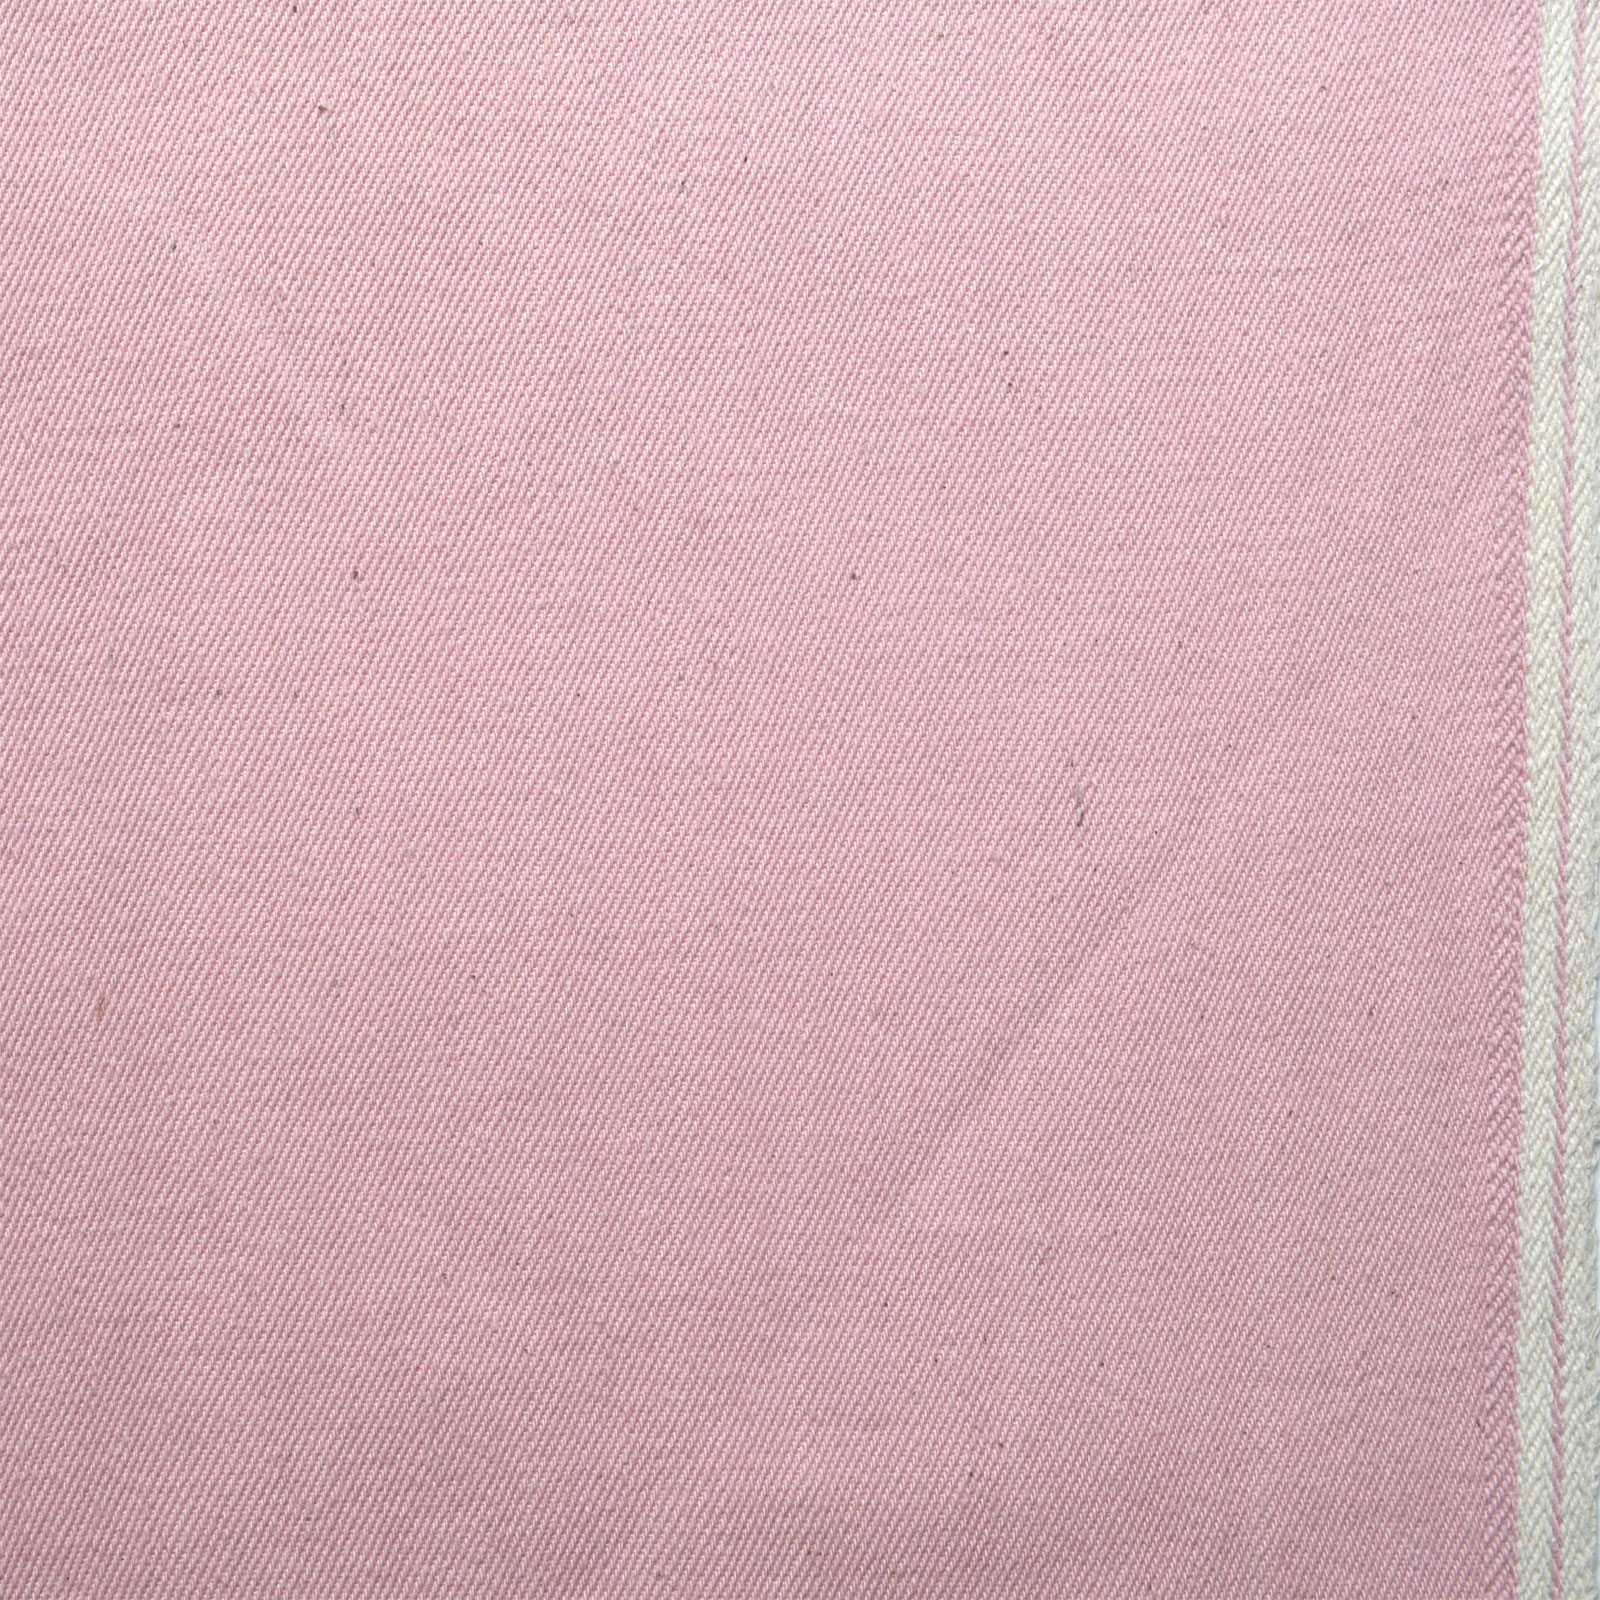 Handloom Selvedge Denim - 6.5 Oz - Light Pink  - Reactive Dye-MWHD-FB-2020-PN(L)